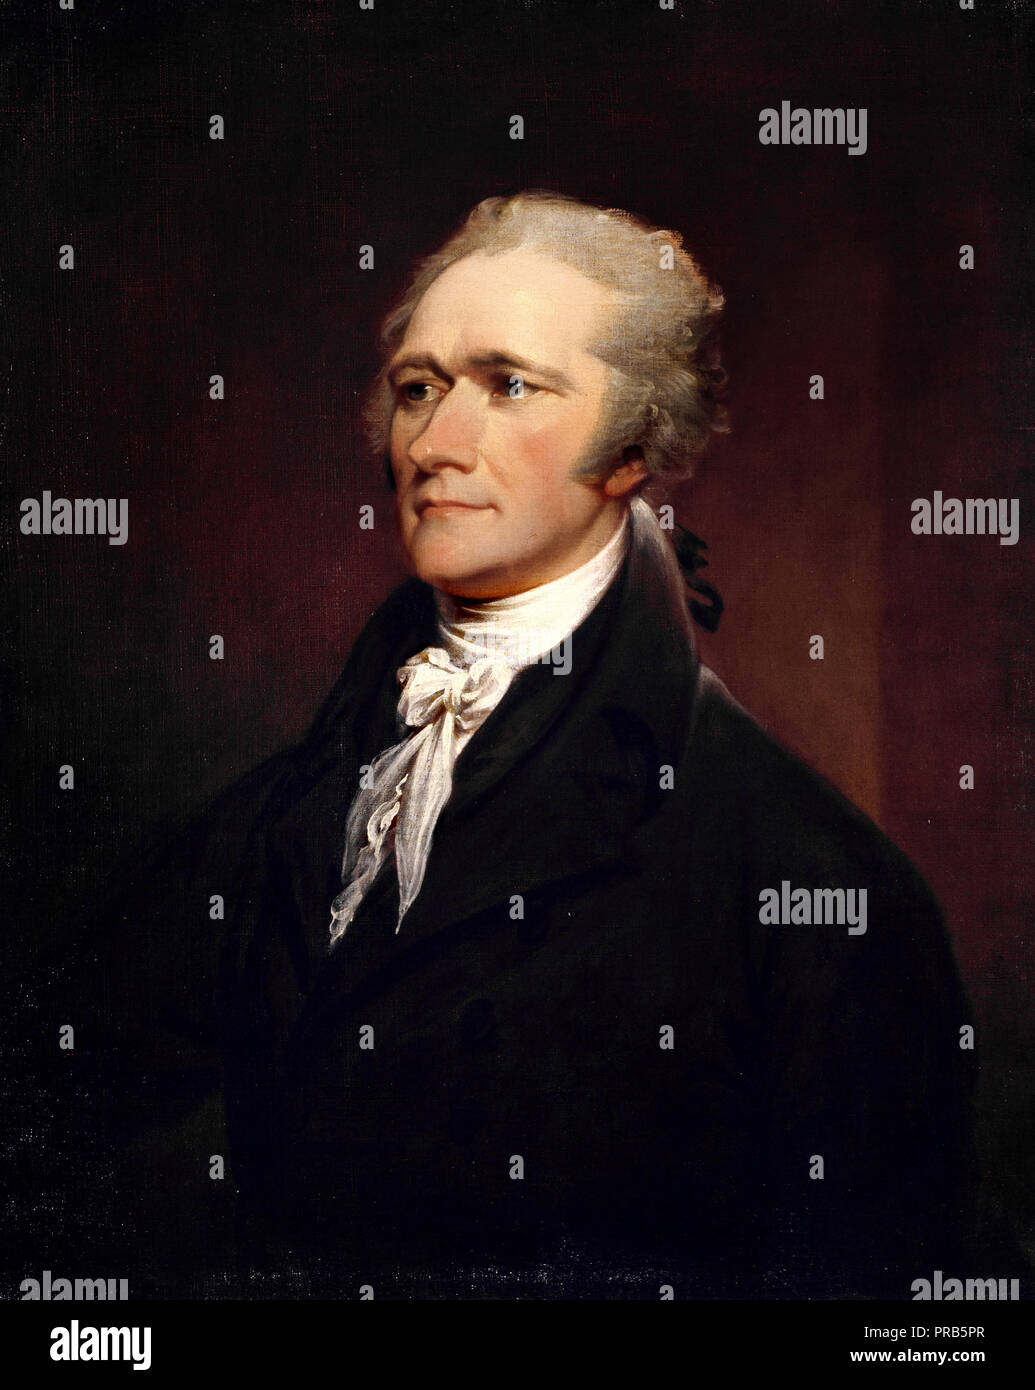 John Trumbull, Alexander Hamilton 1806 Oil on canvas, National Portrait Gallery, Washington, D.C., USA. Stock Photo